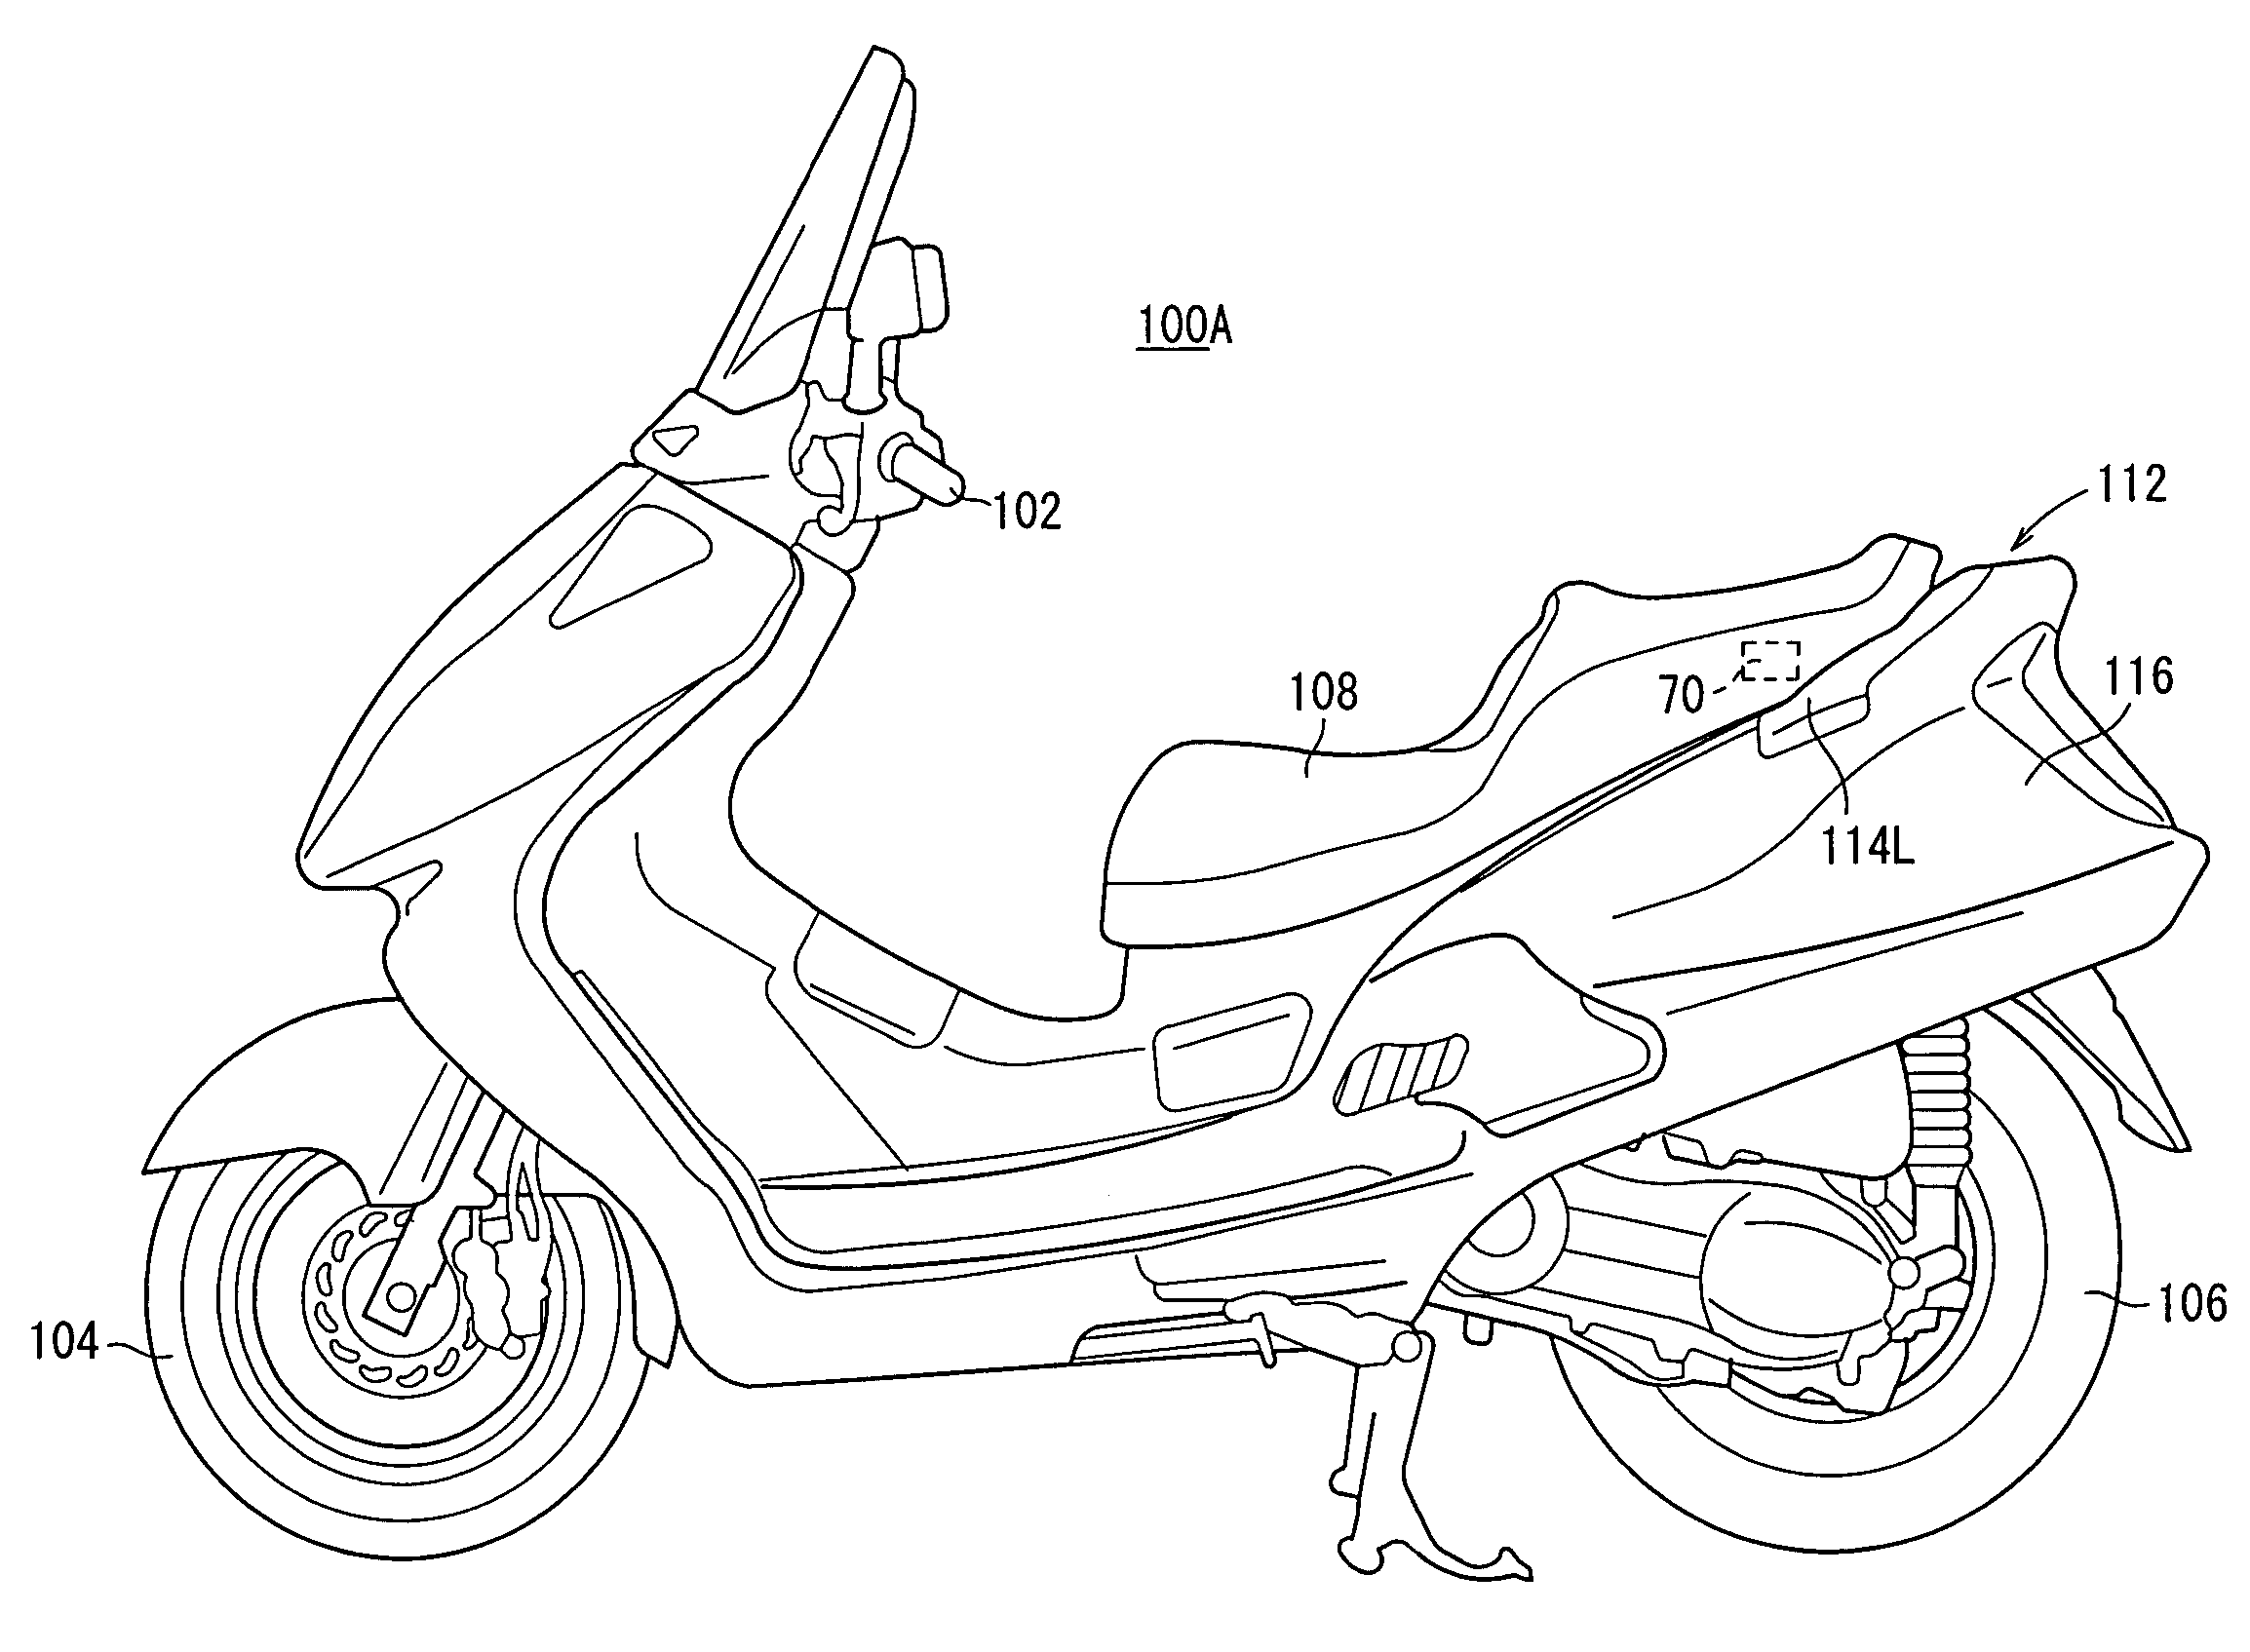 Motorcycle electronic key system